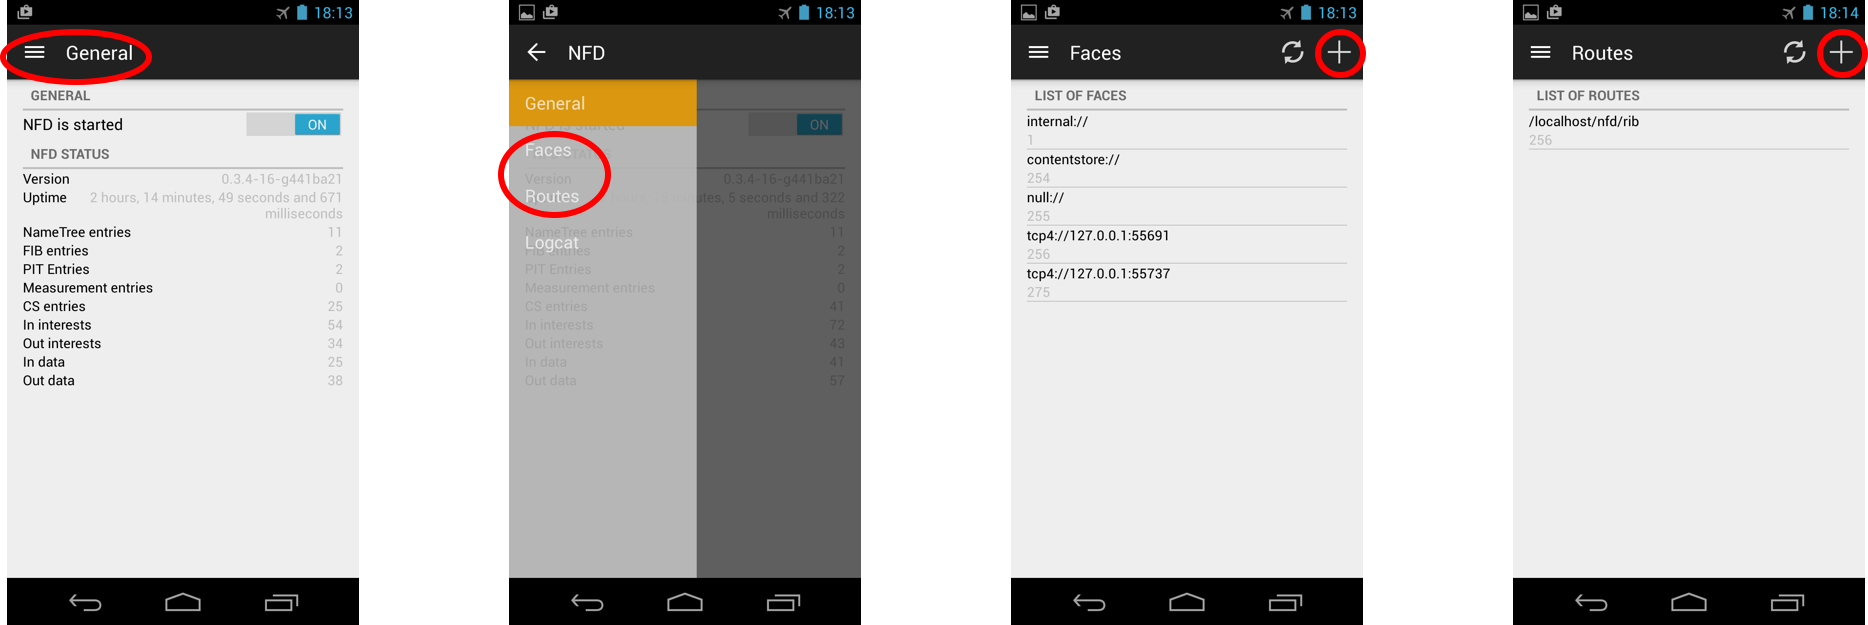 NFD-Android screenshot